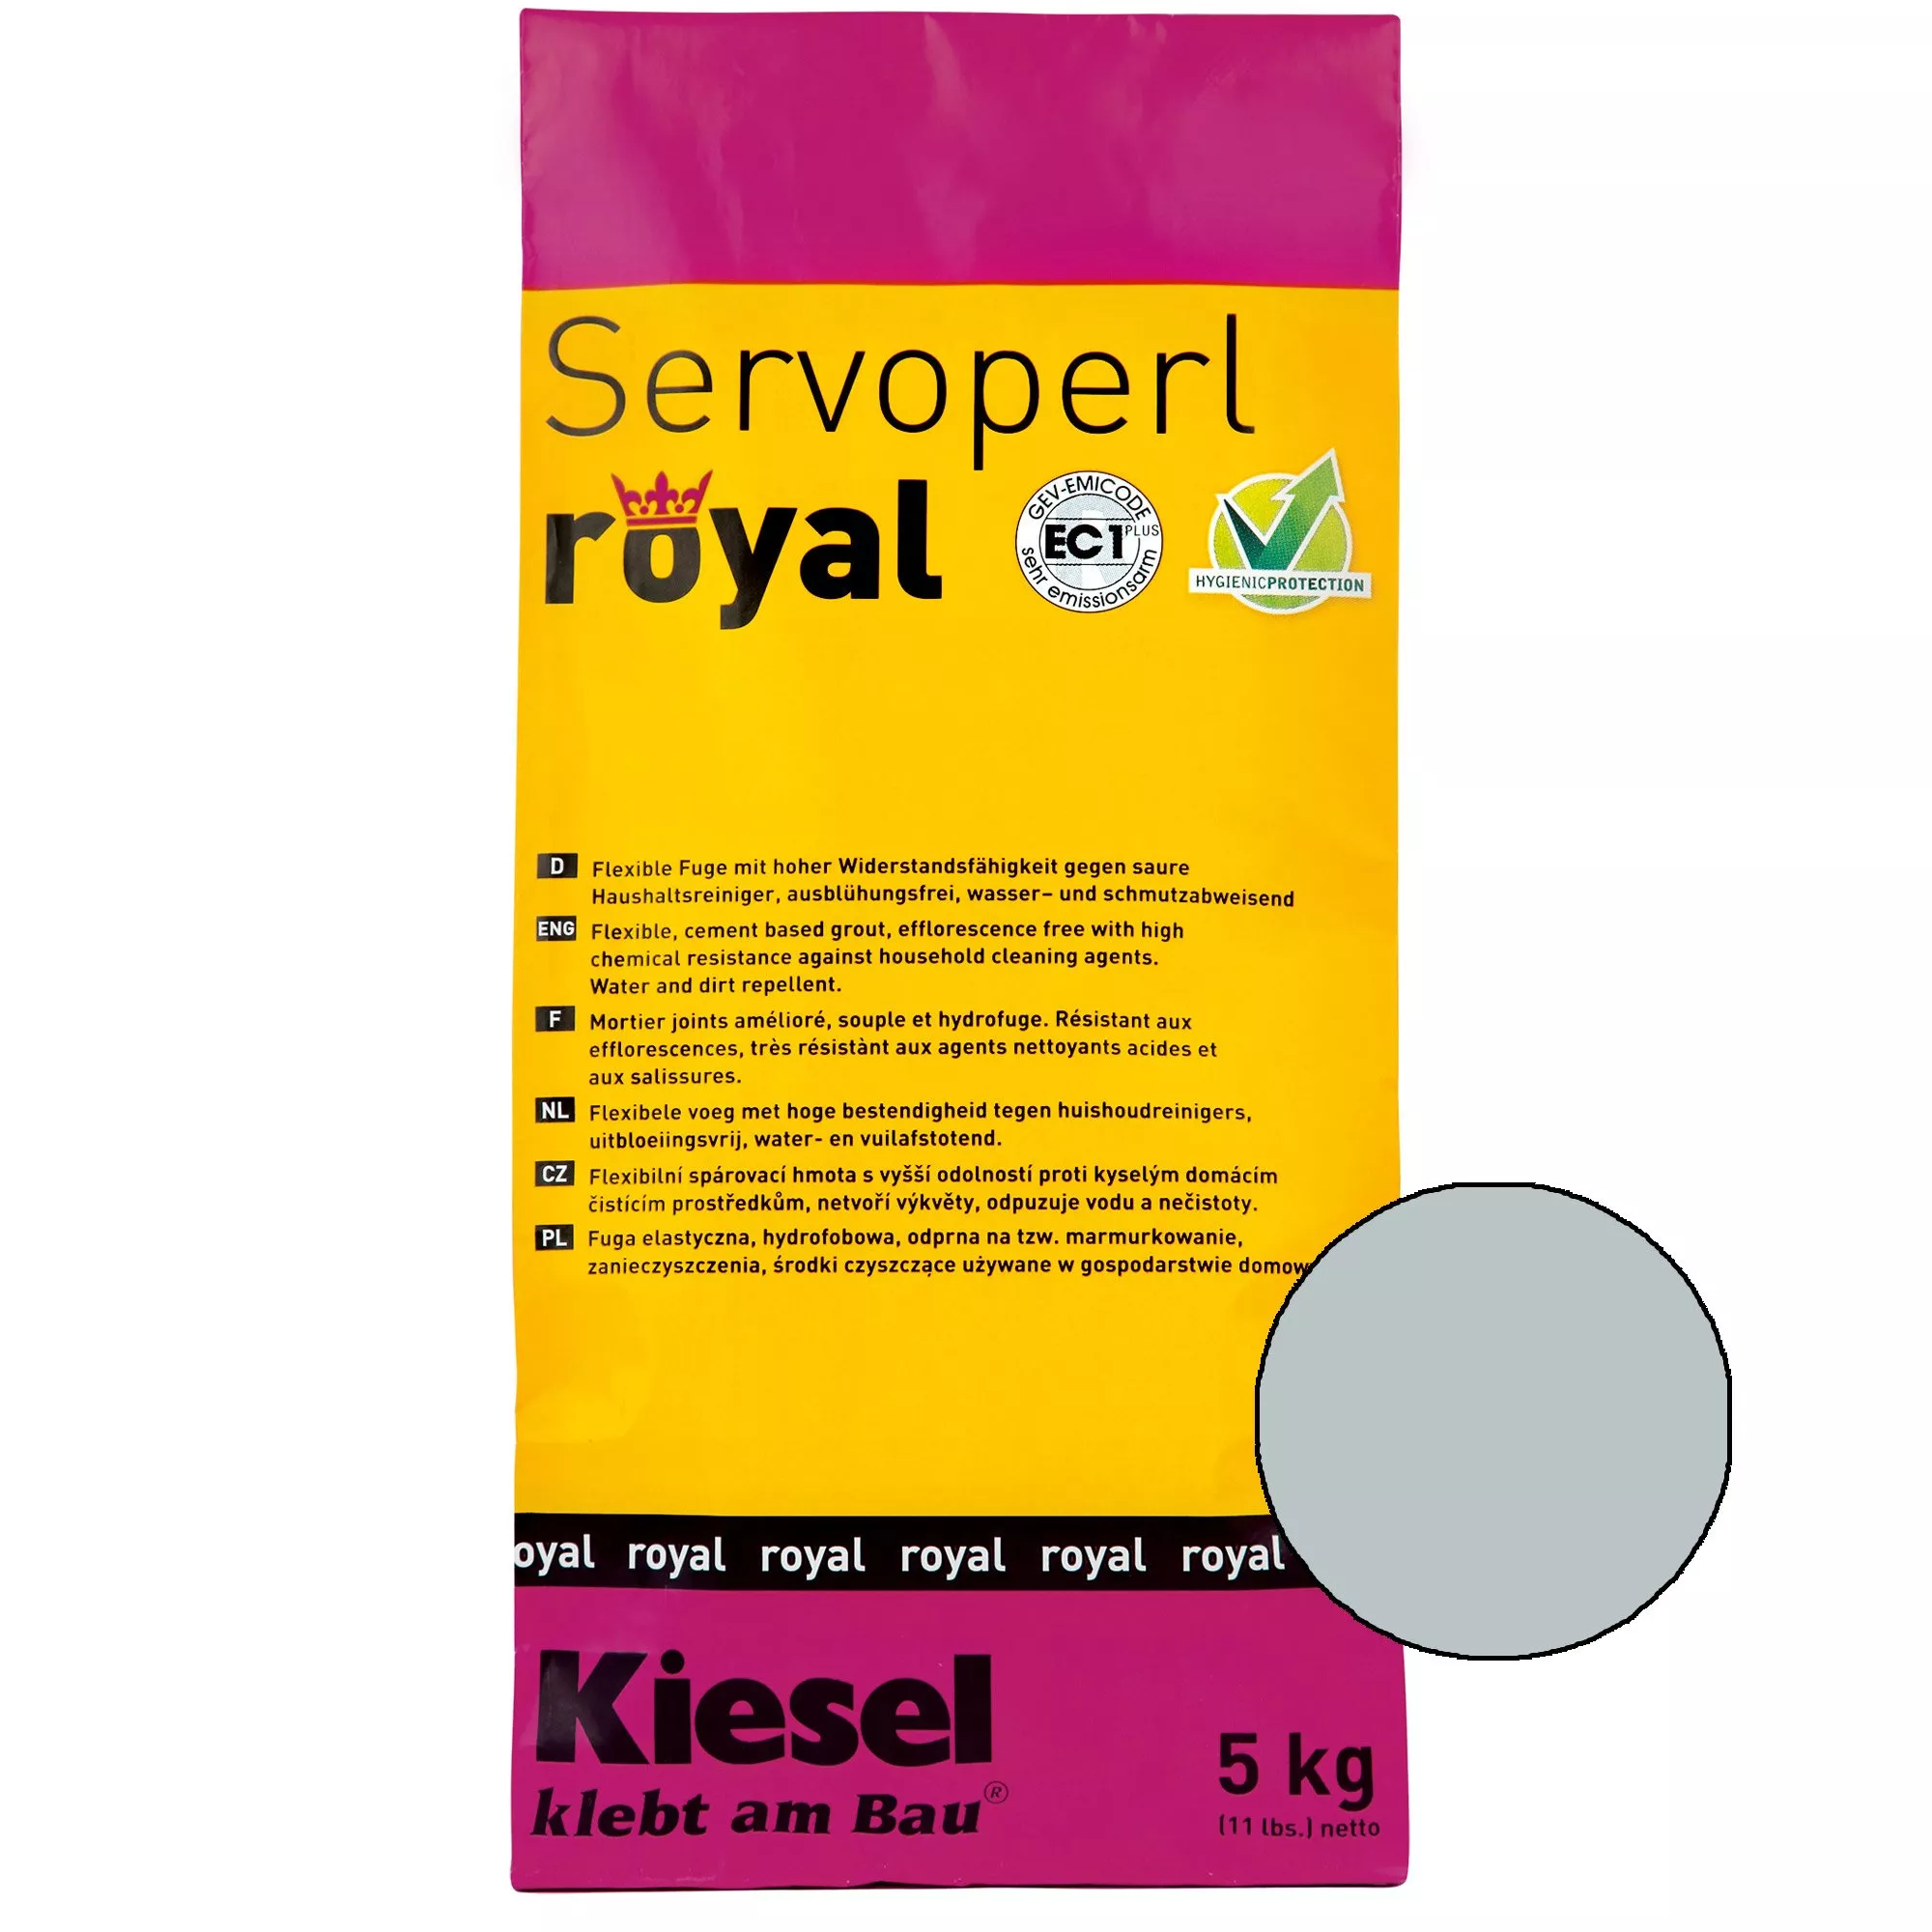 Kiesel Servoperl royal - Flexible, water- and dirt-repellent joint (5KG Manhattan)